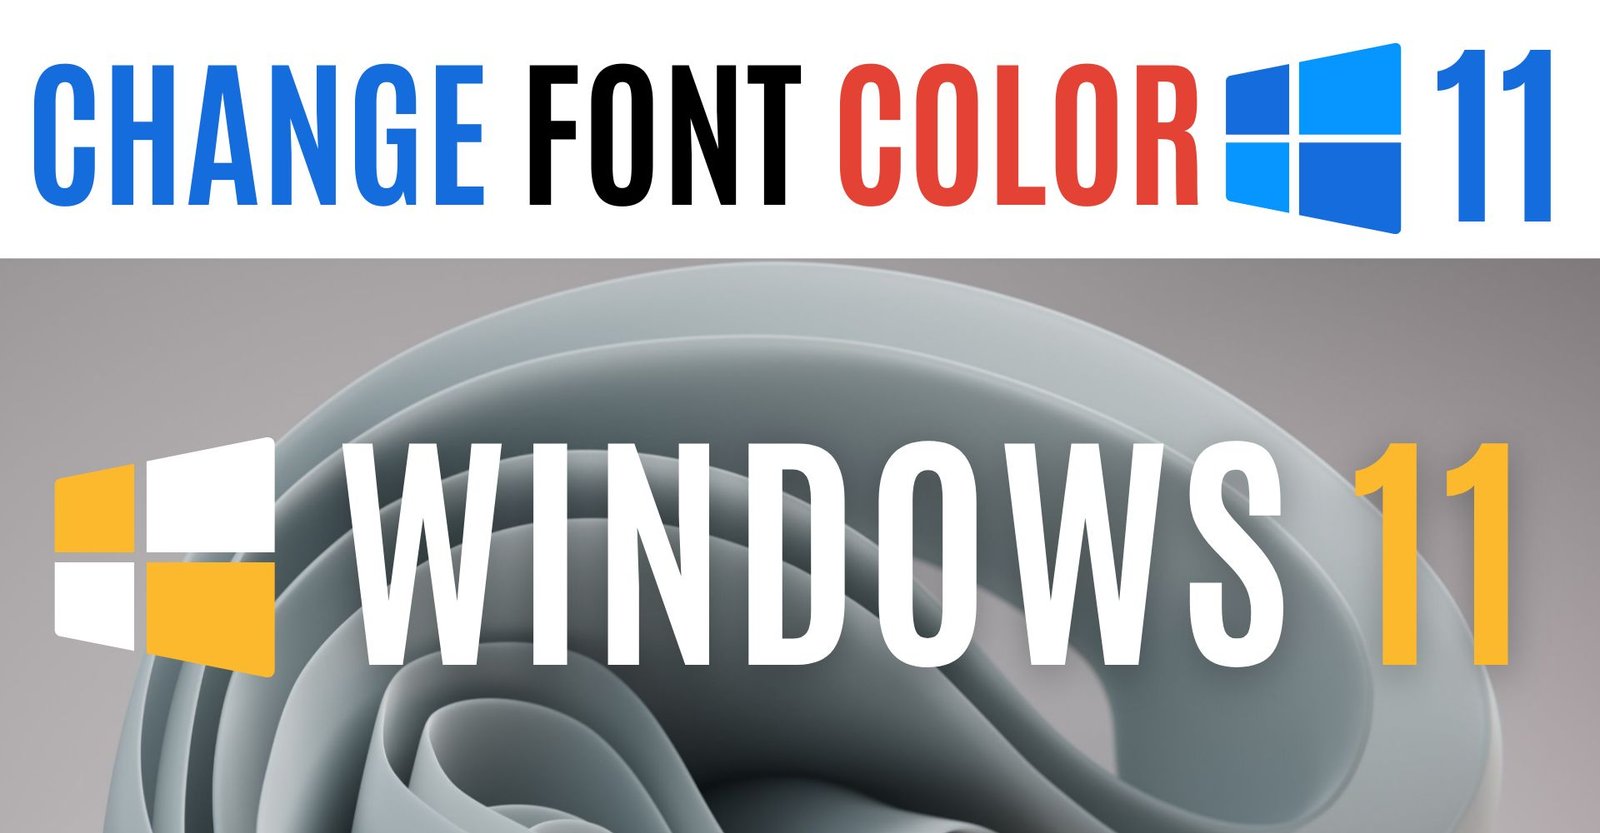 How to change font color in windows 11 Desktop, Laptop?